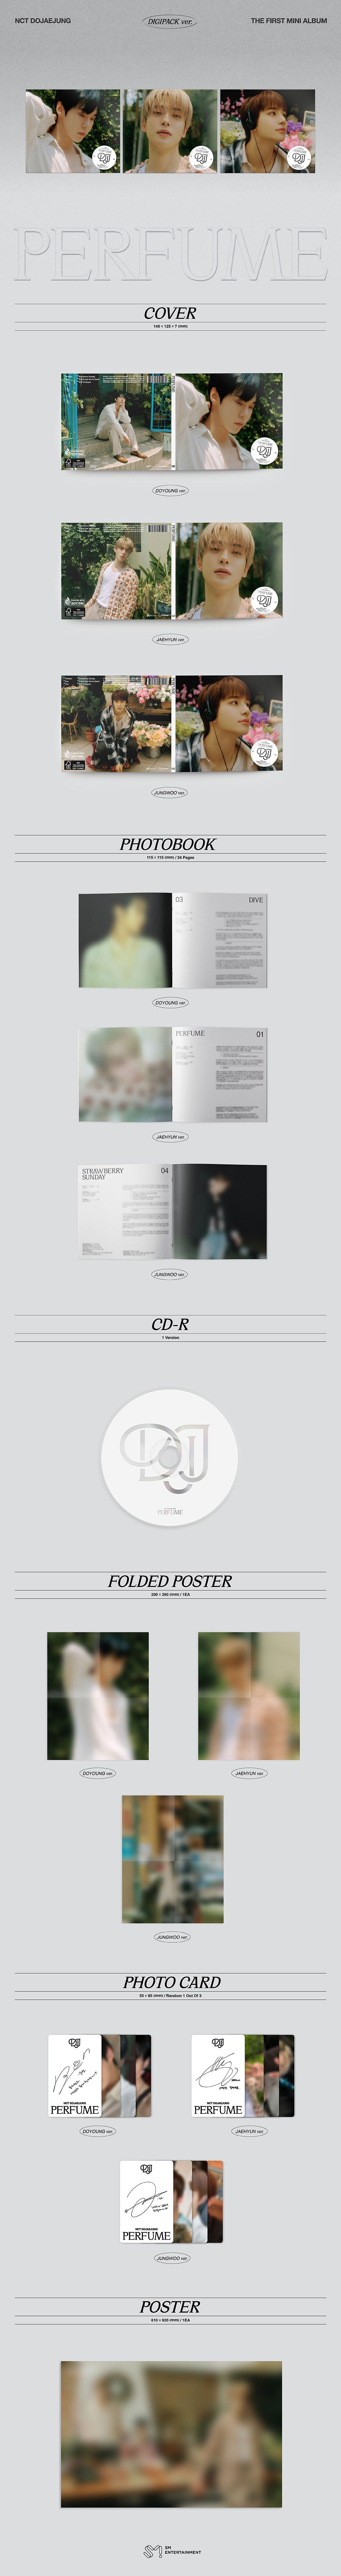 NCT (DOJAEJUNG) - Perfume (1st Mini Album) Digipack Ver.